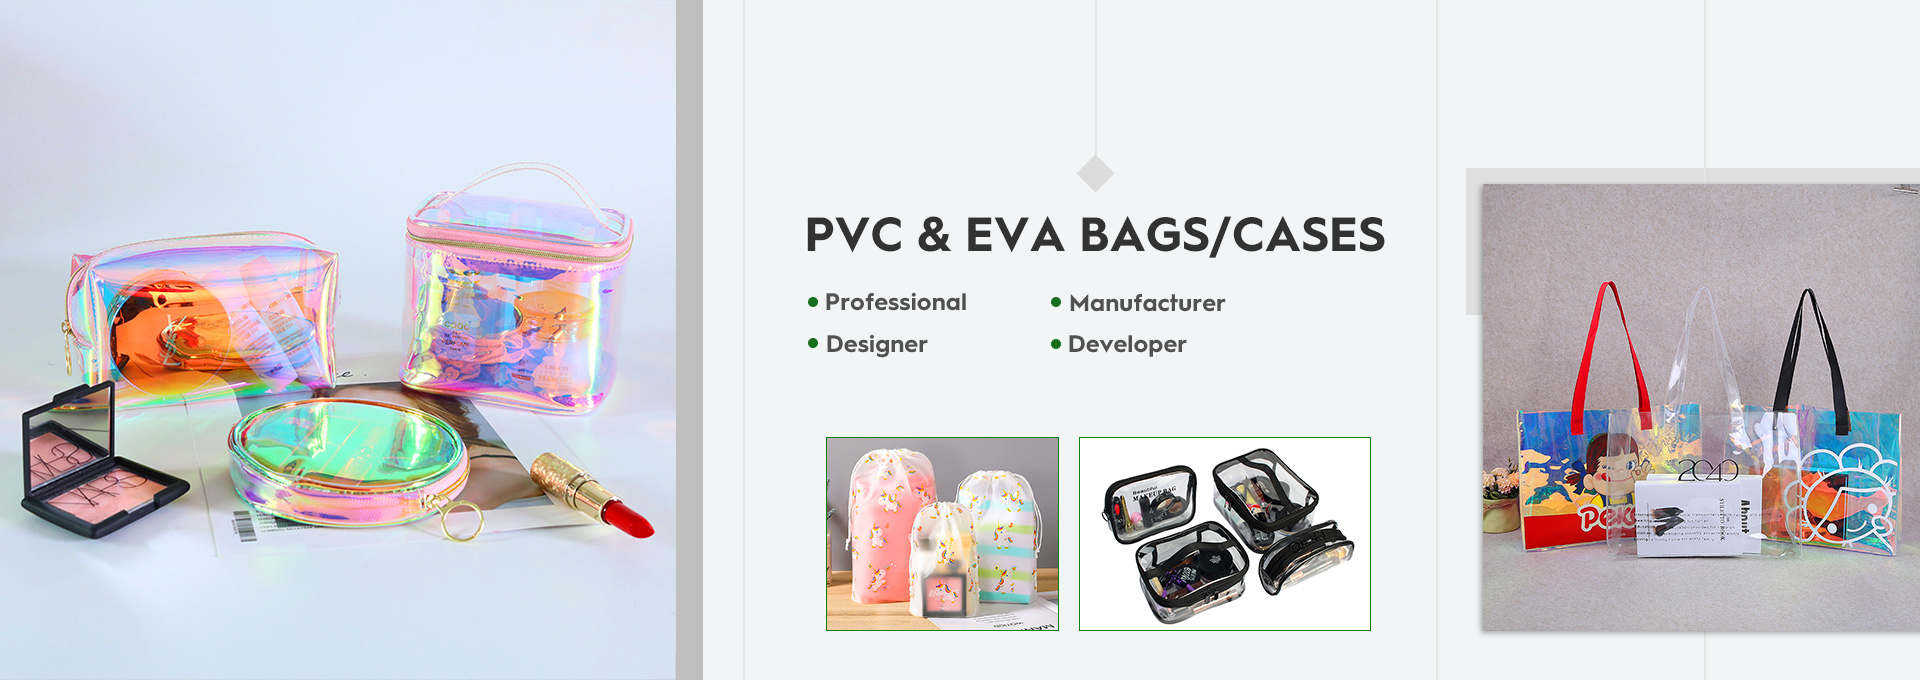 pvc-eva-bag-or-case